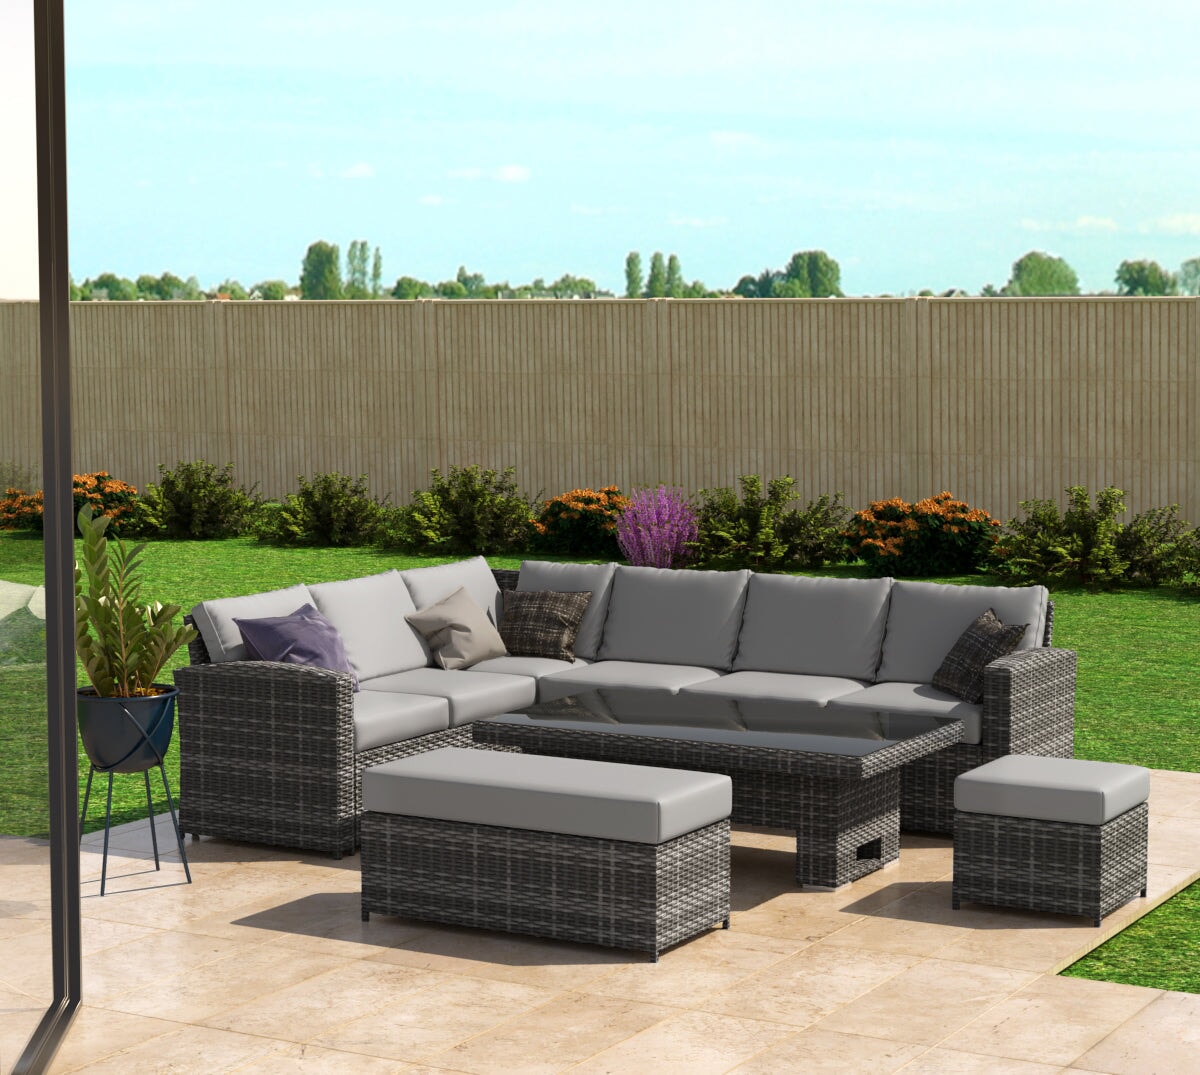 Rattan Outdoor Garden Furniture Sets for Sale UK